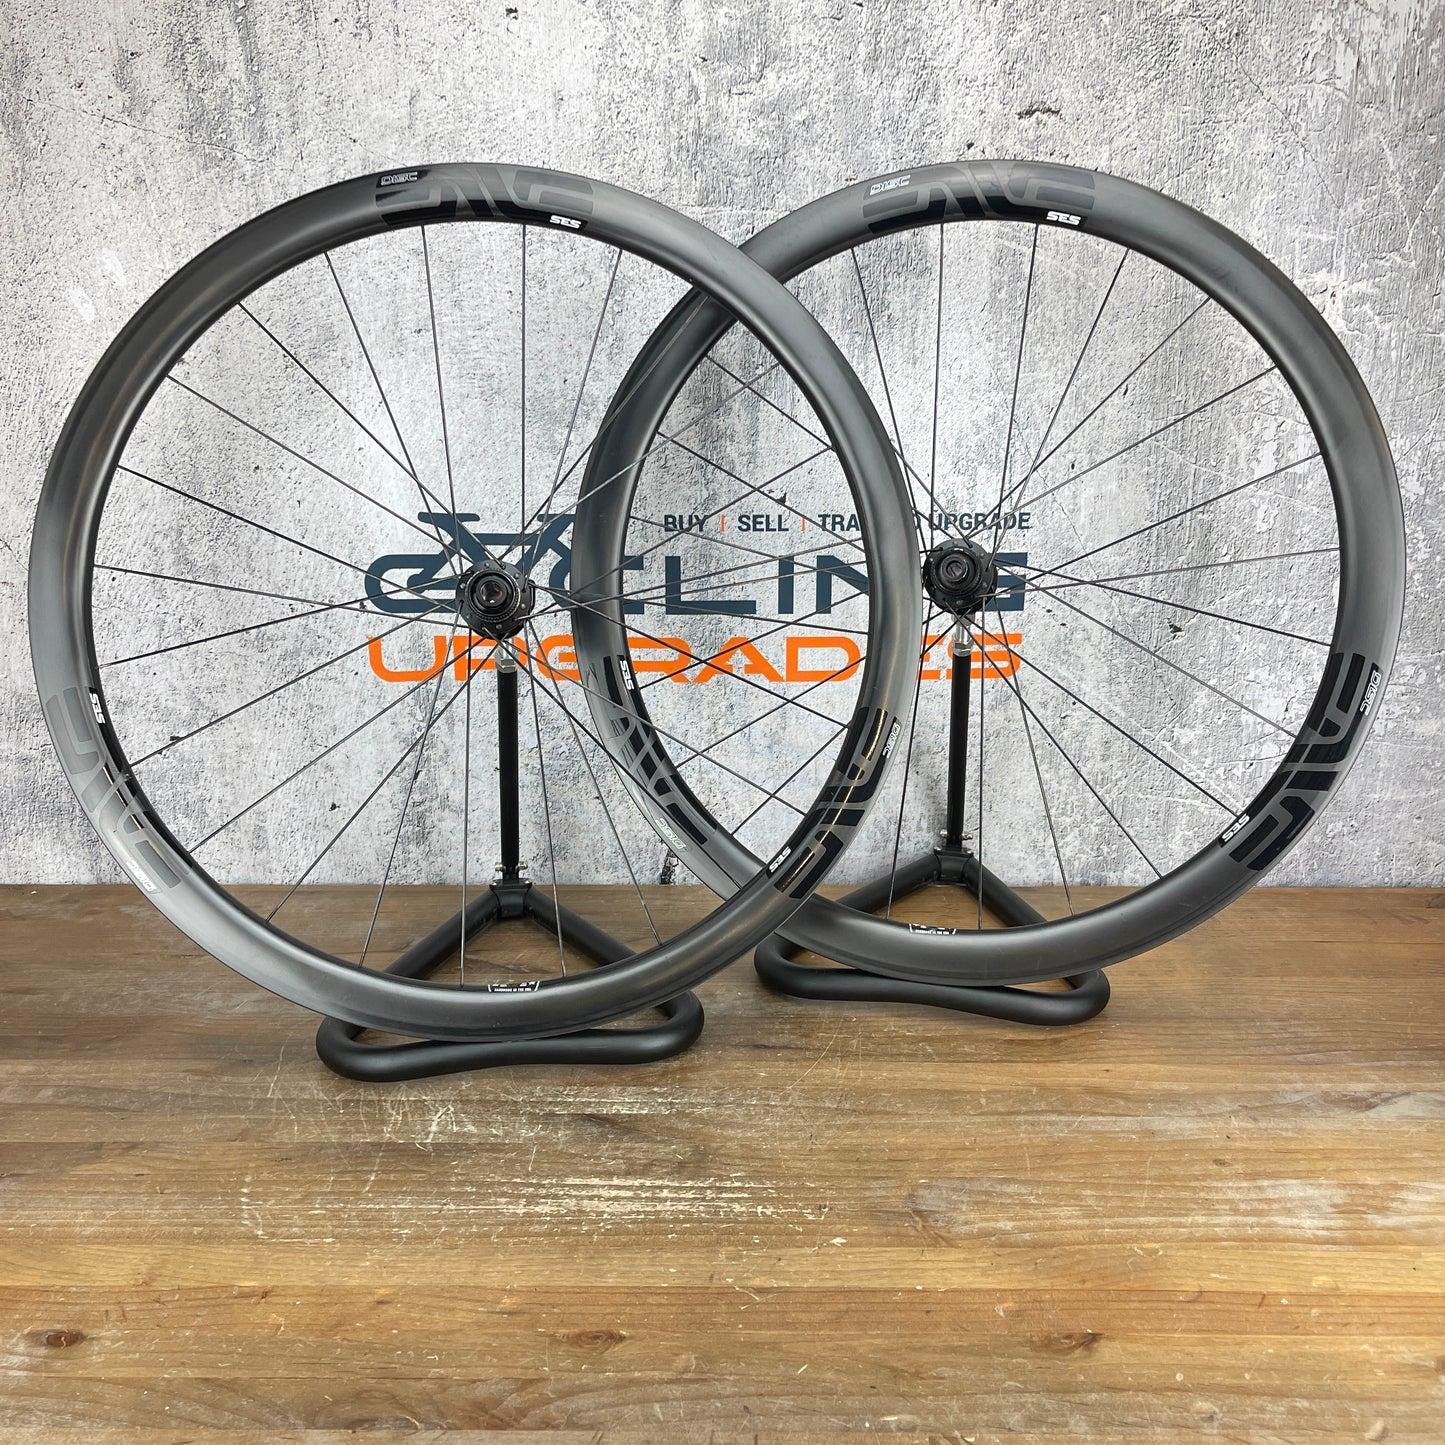 Enve SES 3.4 Carbon Tubeless Road Bike Disc Wheelset 700c 1458g DT 240s Hubs